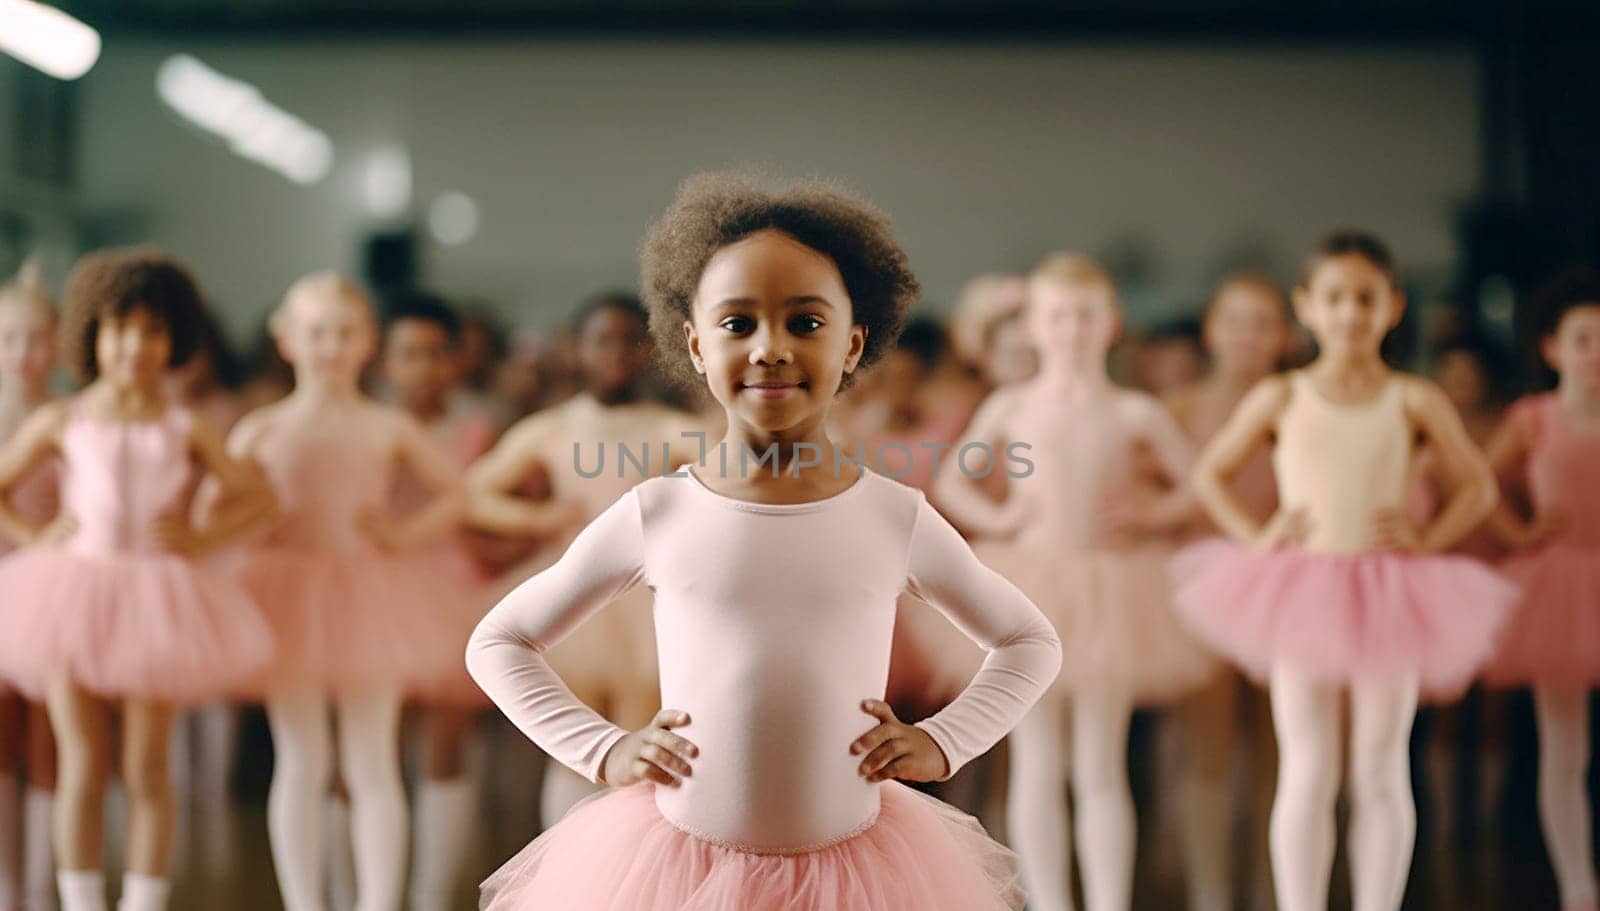 Proud African american little girl on ballet wearing a pink tutu skirt. Children standing in ballet poses in studio. Graceful ballerinas dancing together in studio having fun education by Annebel146